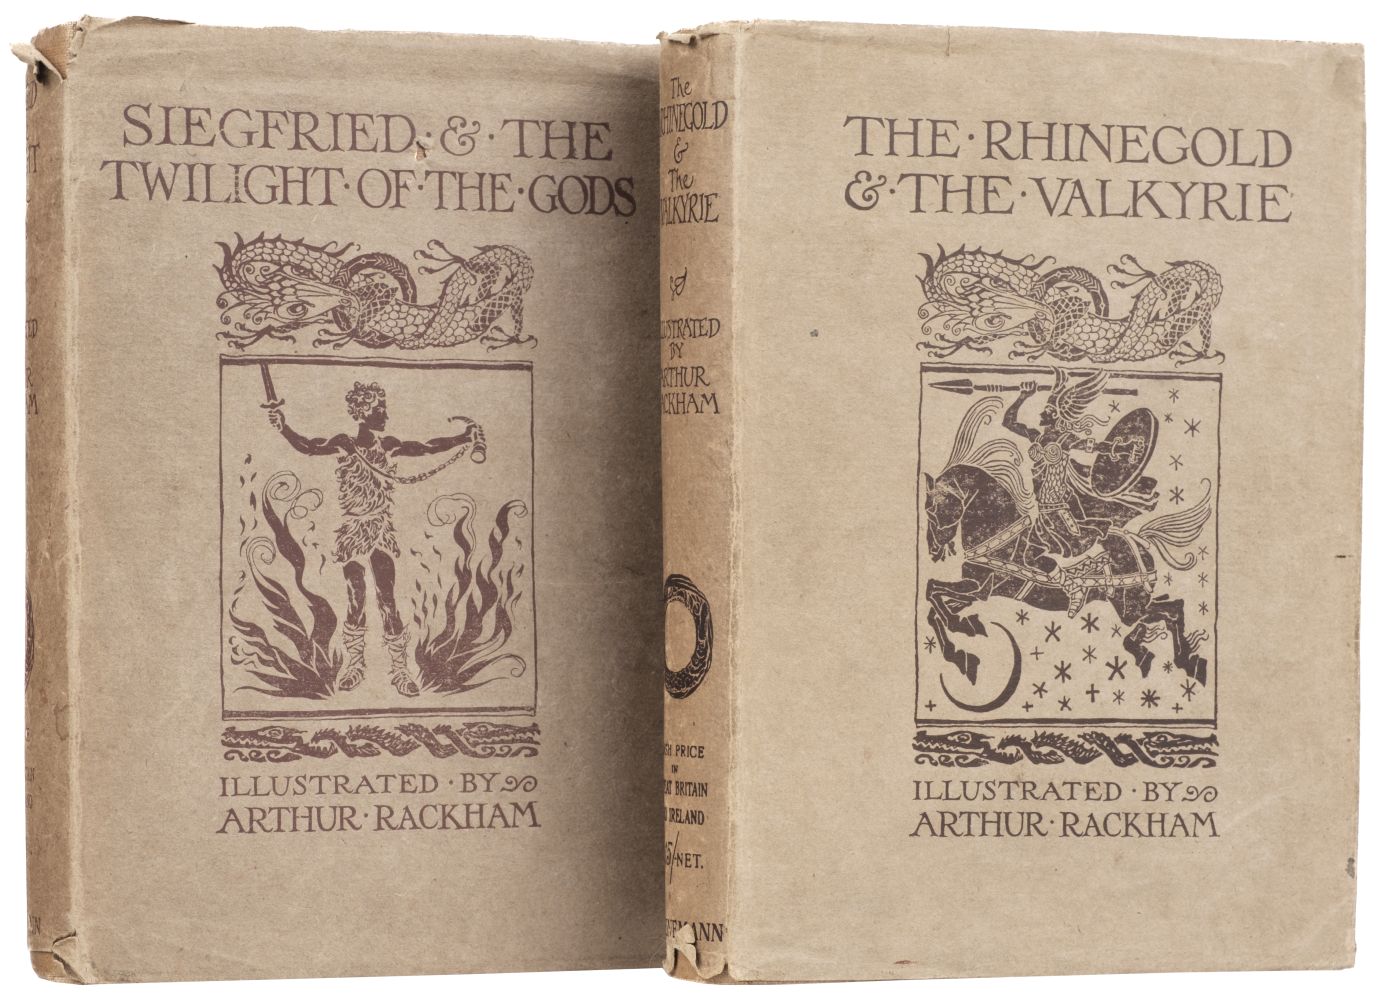 Rackham (Arthur, illustrator). The Rhinegold & The Valkyrie, London: William Heinemann, 1910